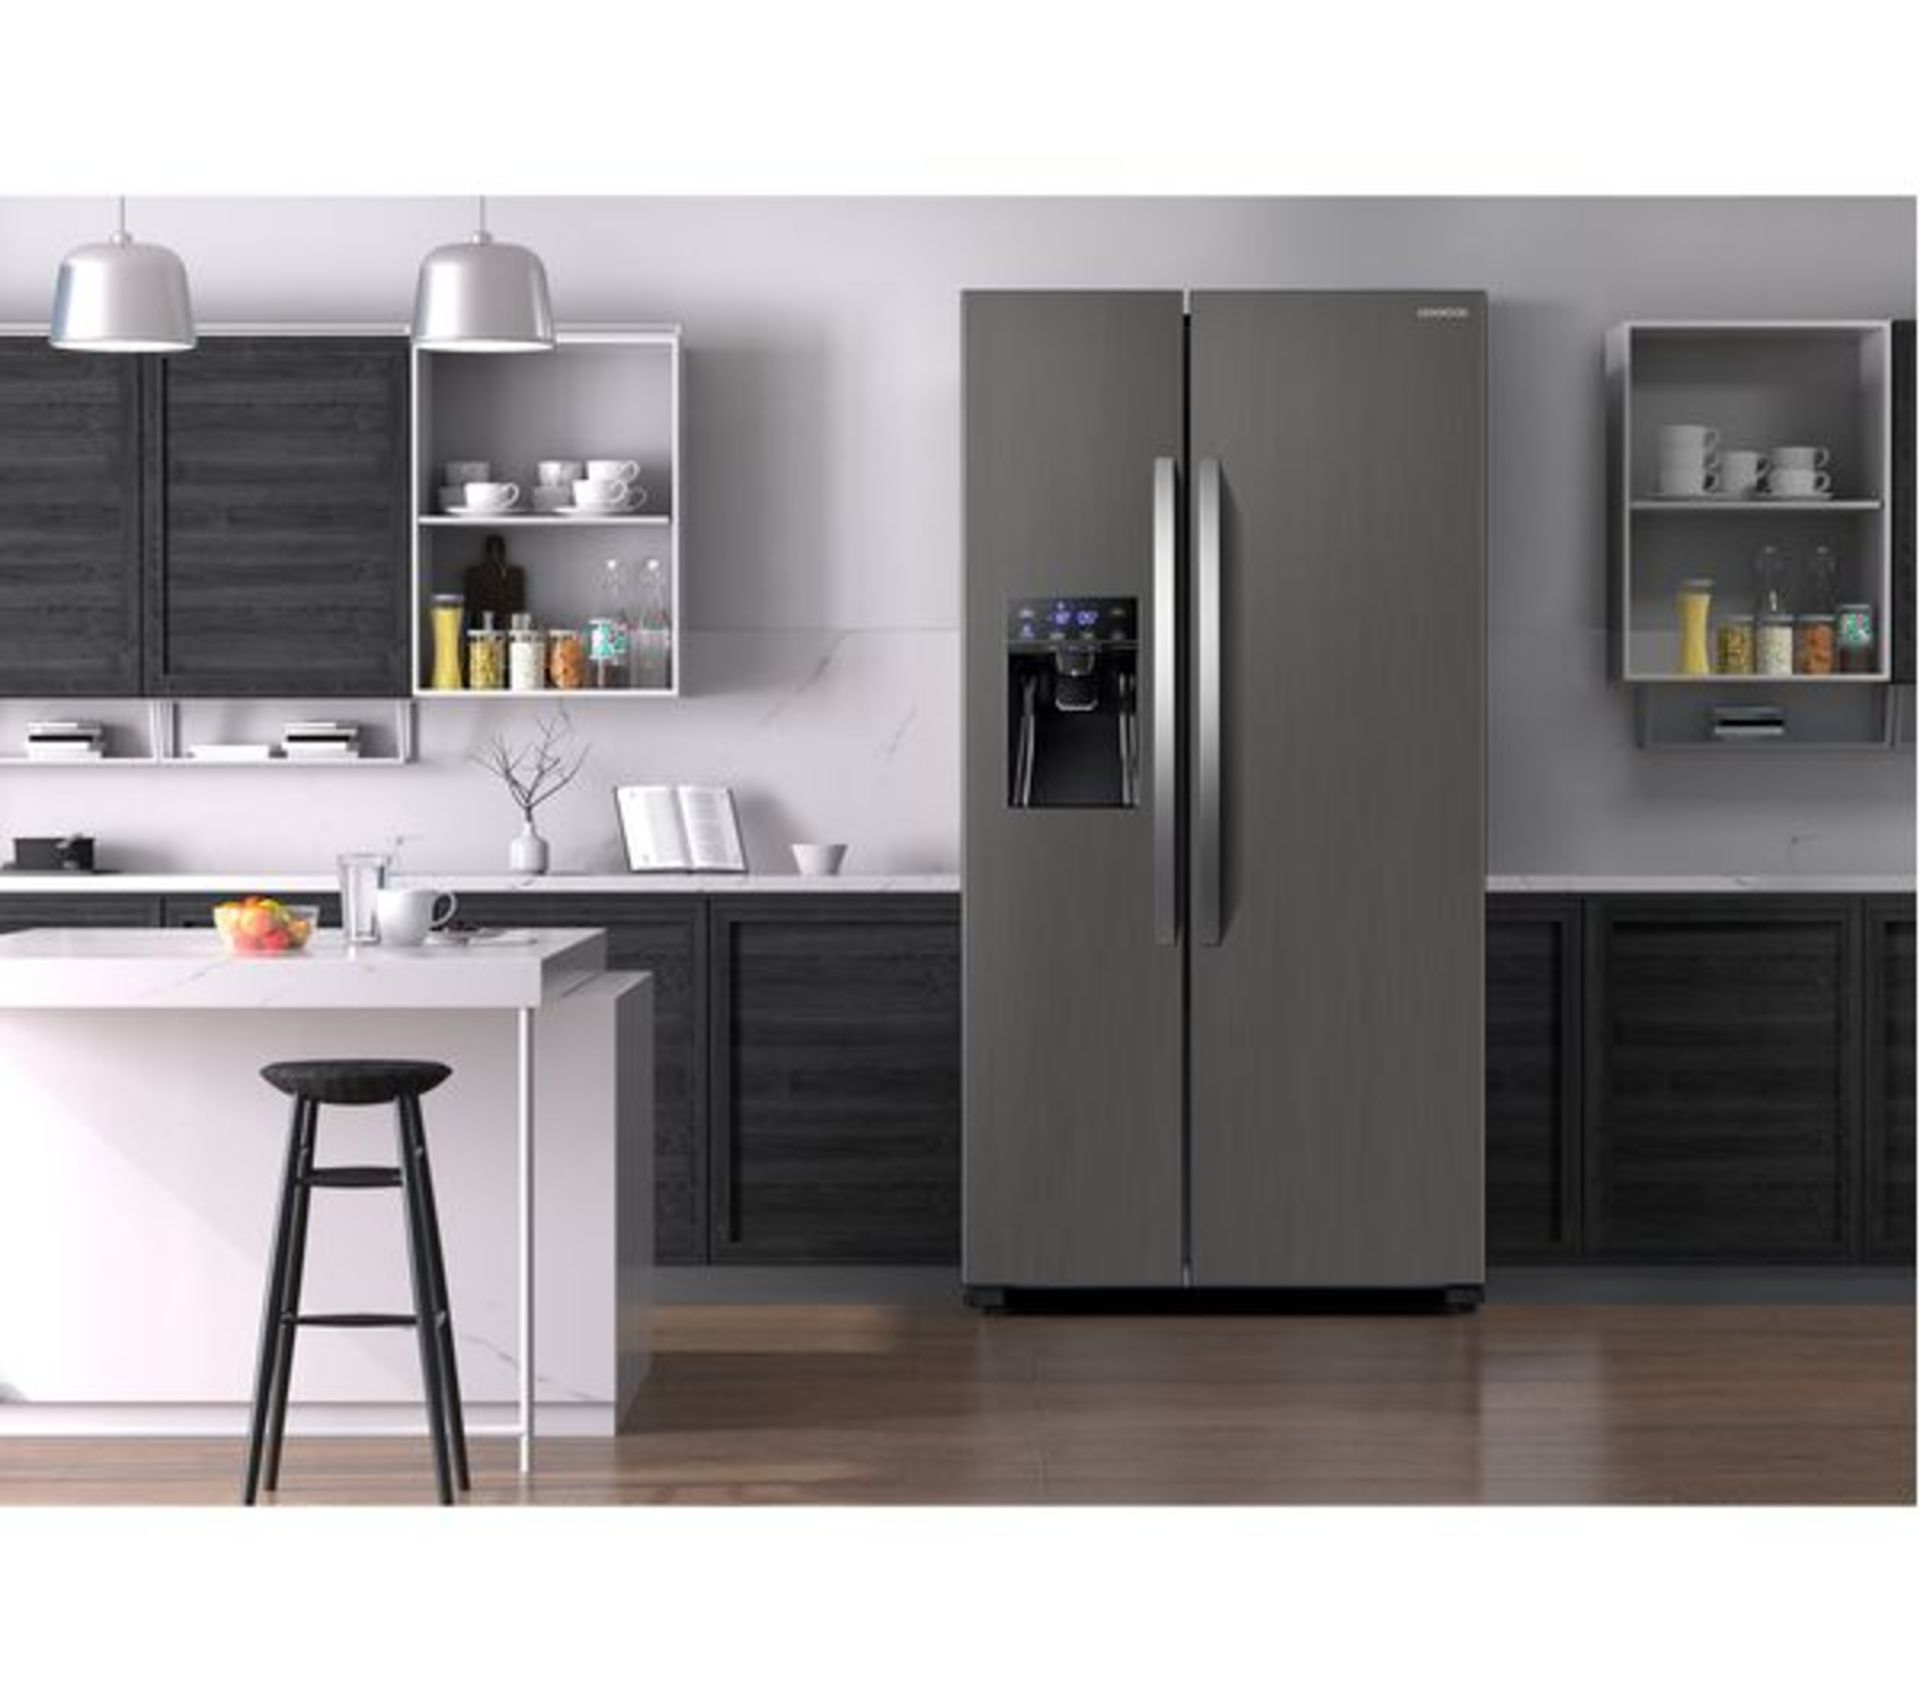 1 x Kenwood KSBSDIX20 American Style Fridge Freezer With Stainless Steel Finish - Unused With - Image 3 of 8